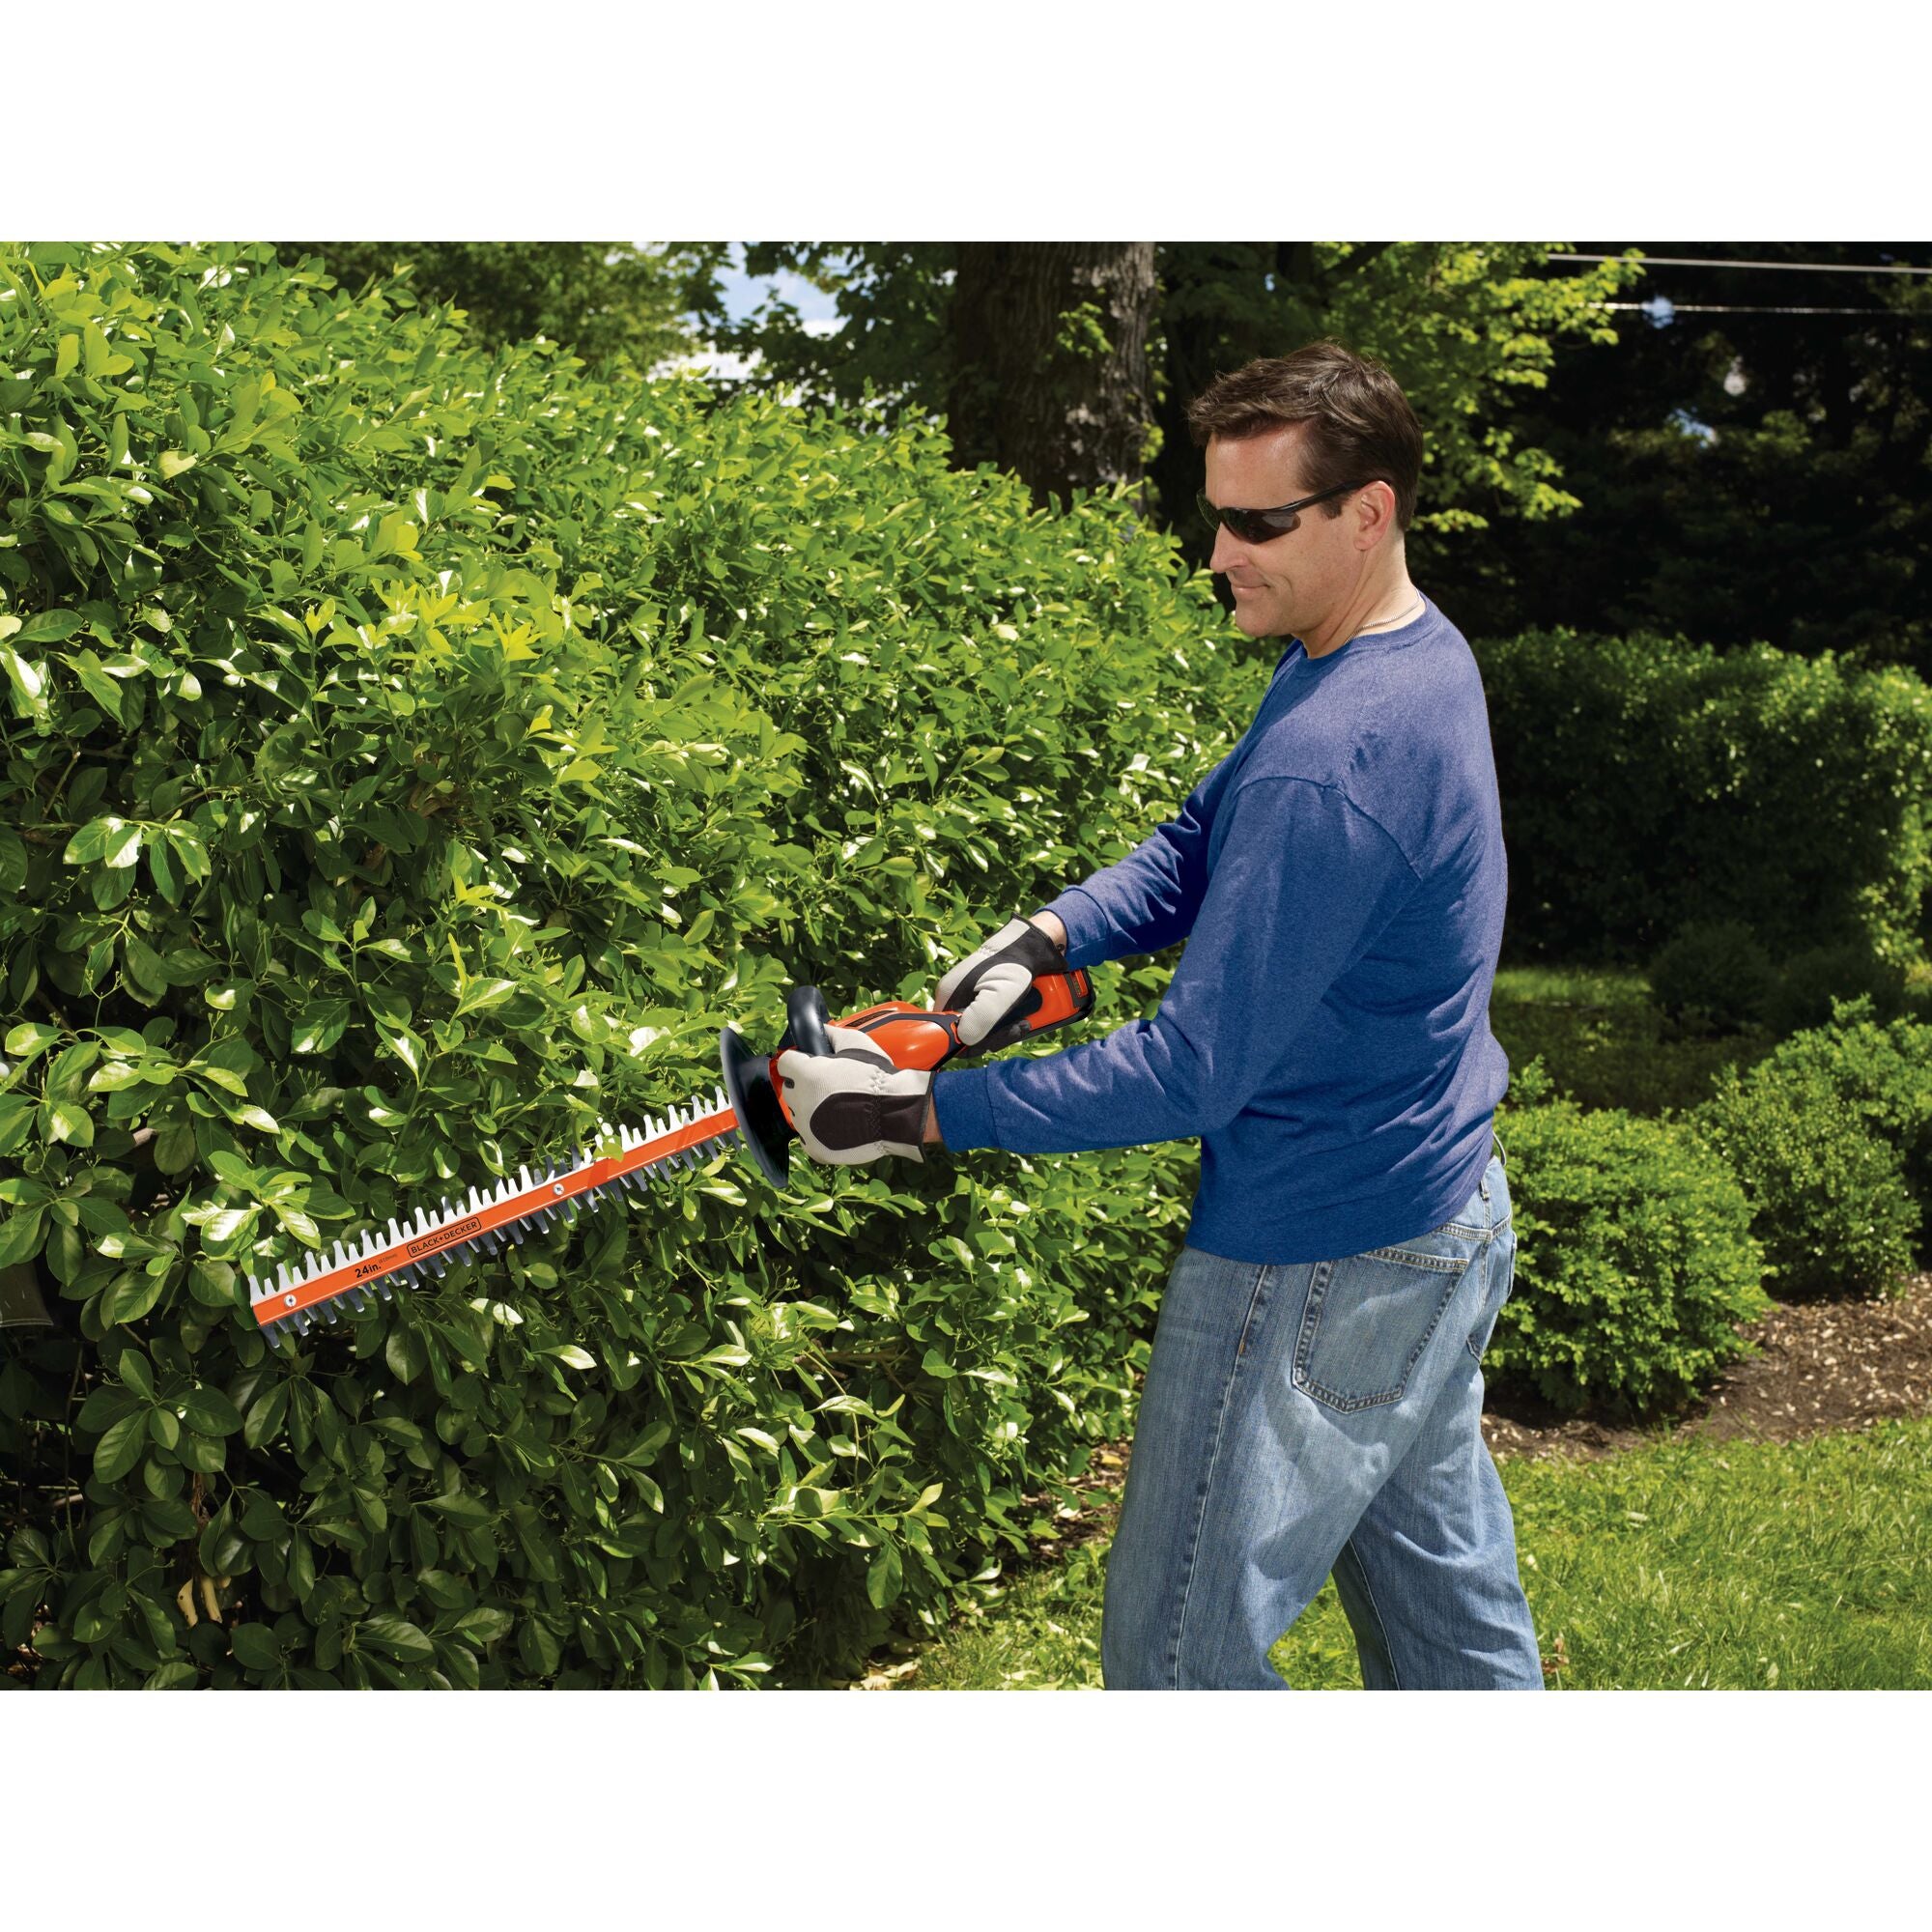 Black & Decker LHT2436B cordless hedge trimmer review